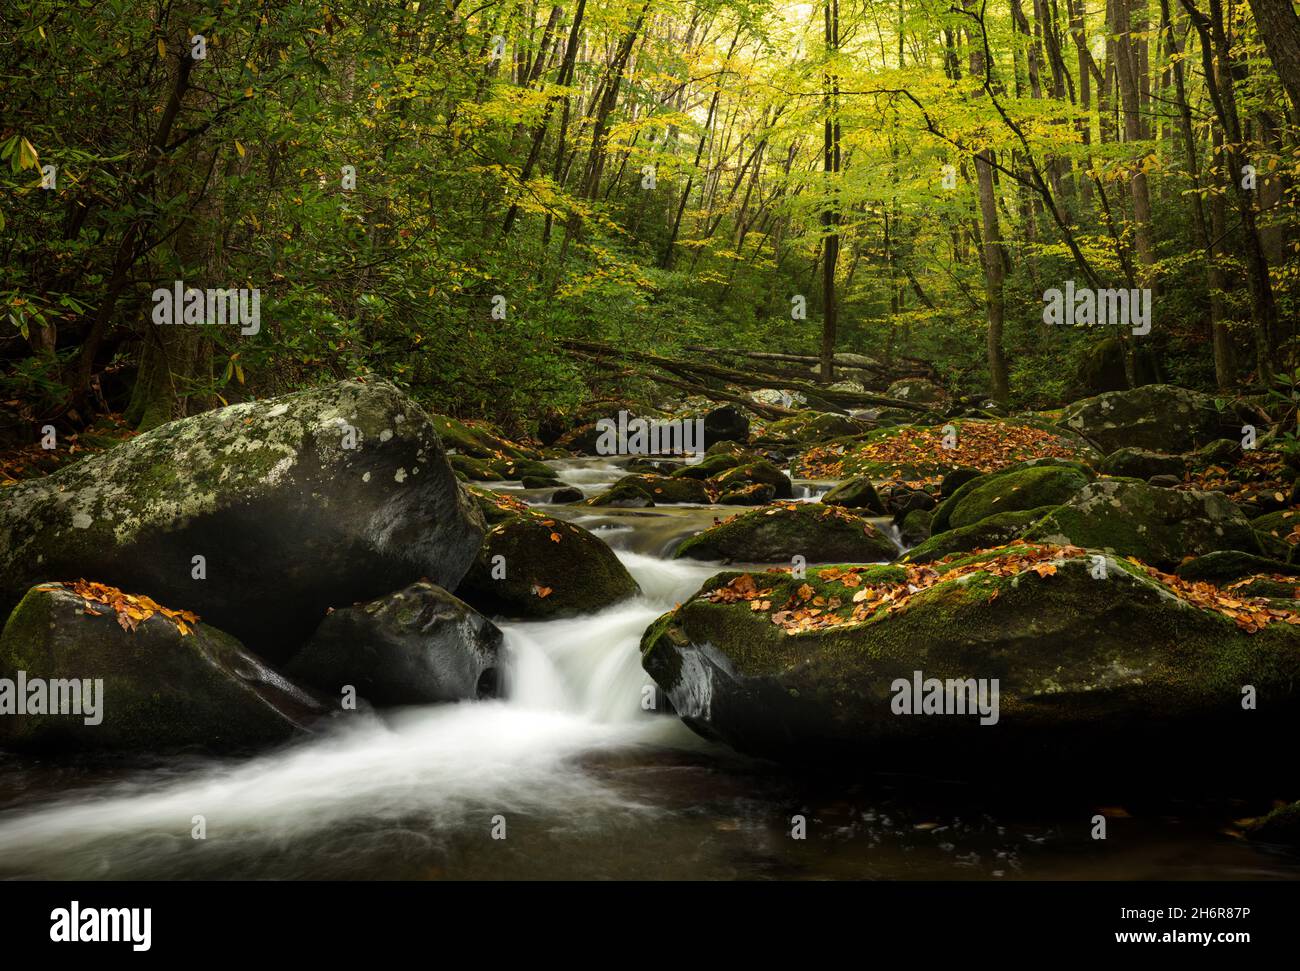 Herbstfarbe auf Lynn Camp Prong, Great Smoky Mountain National Park - Sevier County, Tennessee. Lynn Camp Prong schlängelt sich durch mit Blättern bedeckte Felsbrocken Stockfoto